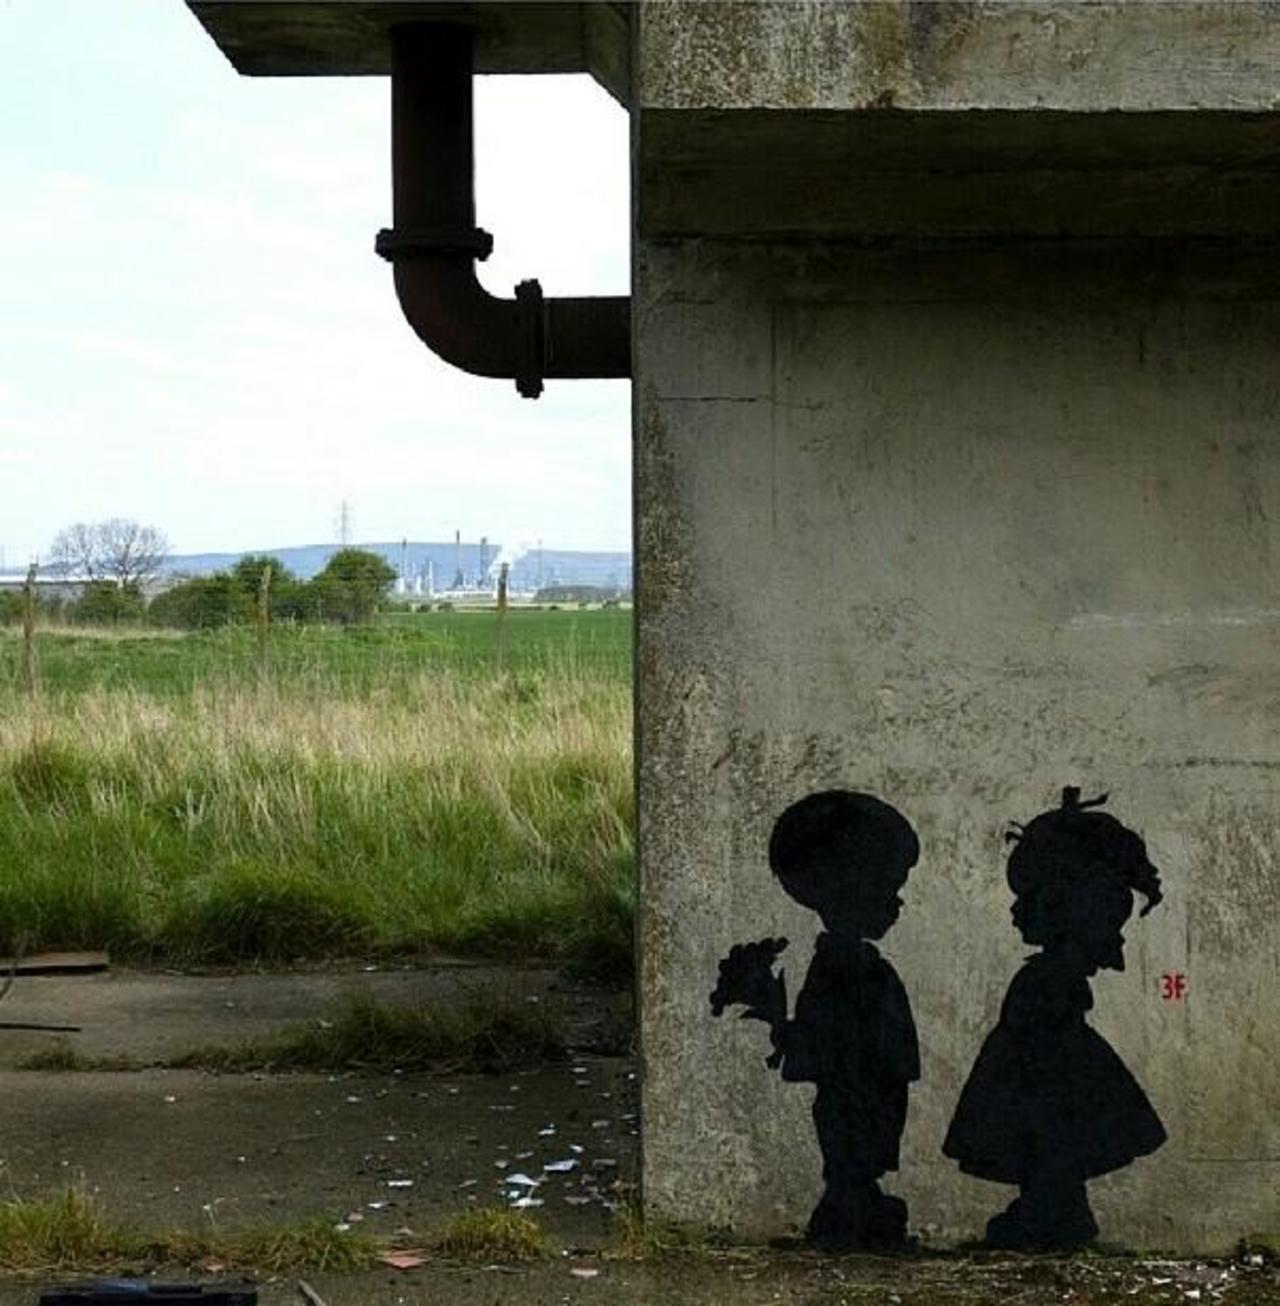 Found love in a hopeless place!

Street Art by 3fountains 

#art #mural #graffiti #streetart http://t.co/c7OfFKFrhy